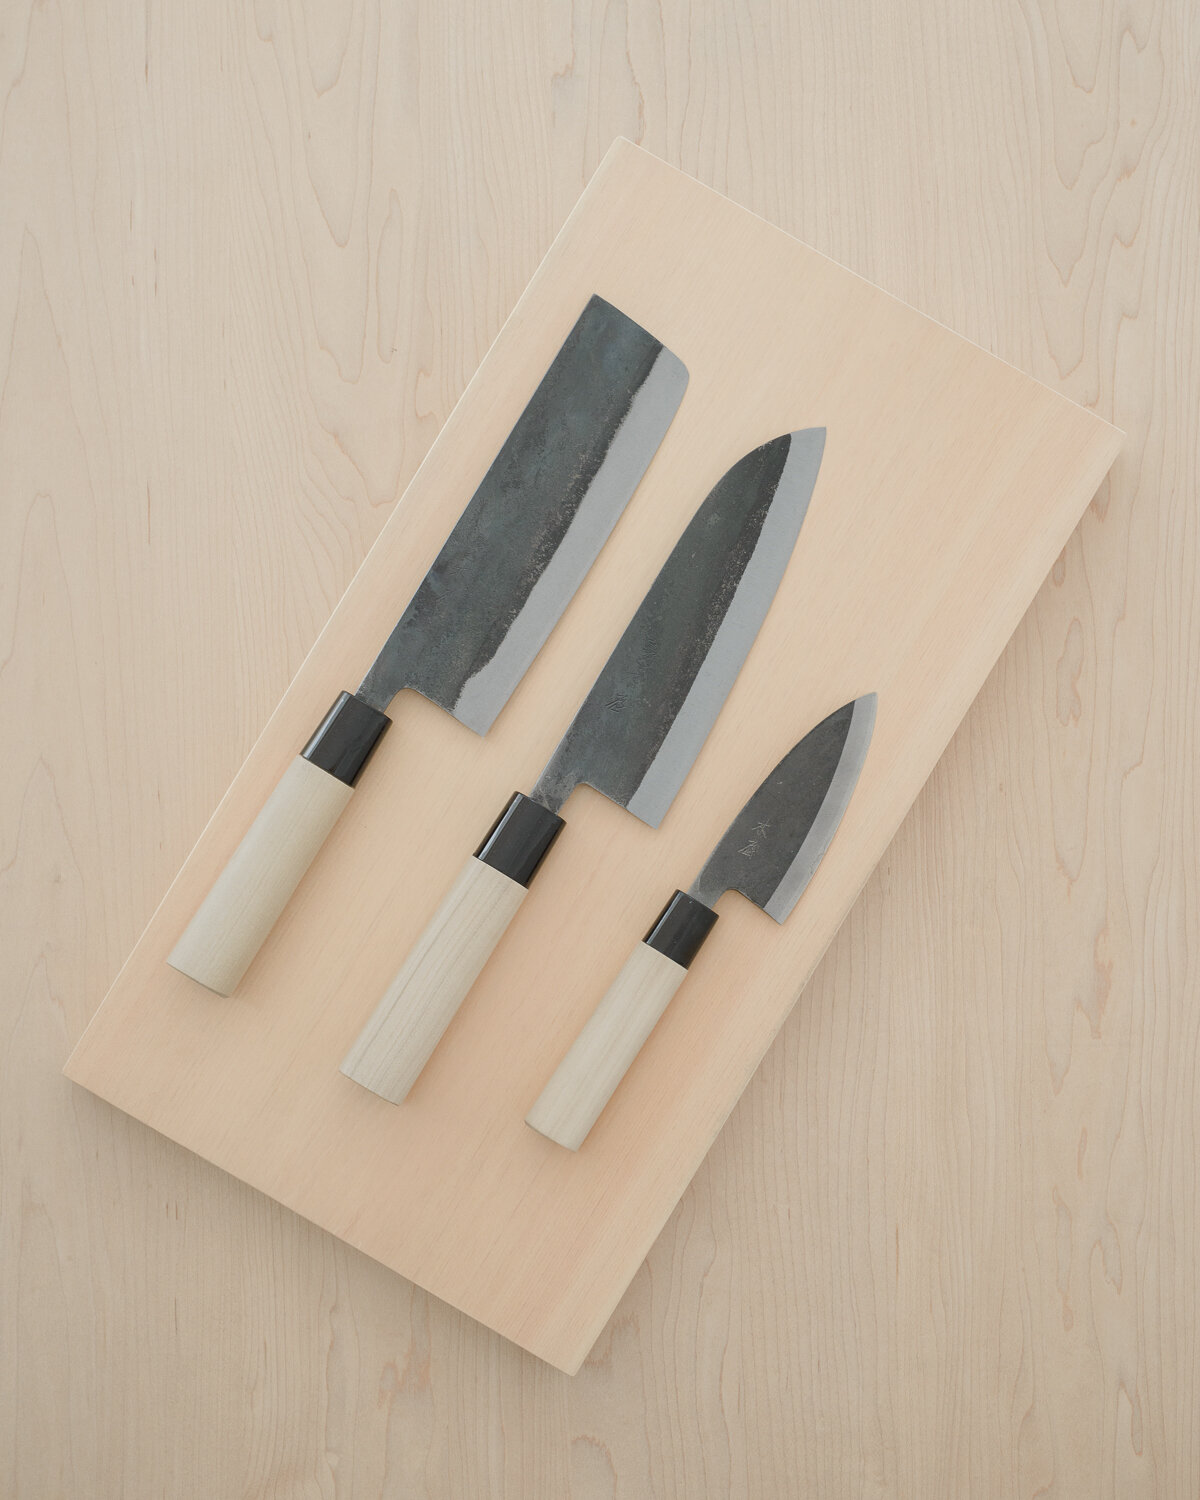 Professional Kitchen Knife Meiji - Japanese Knives - My Japanese Home